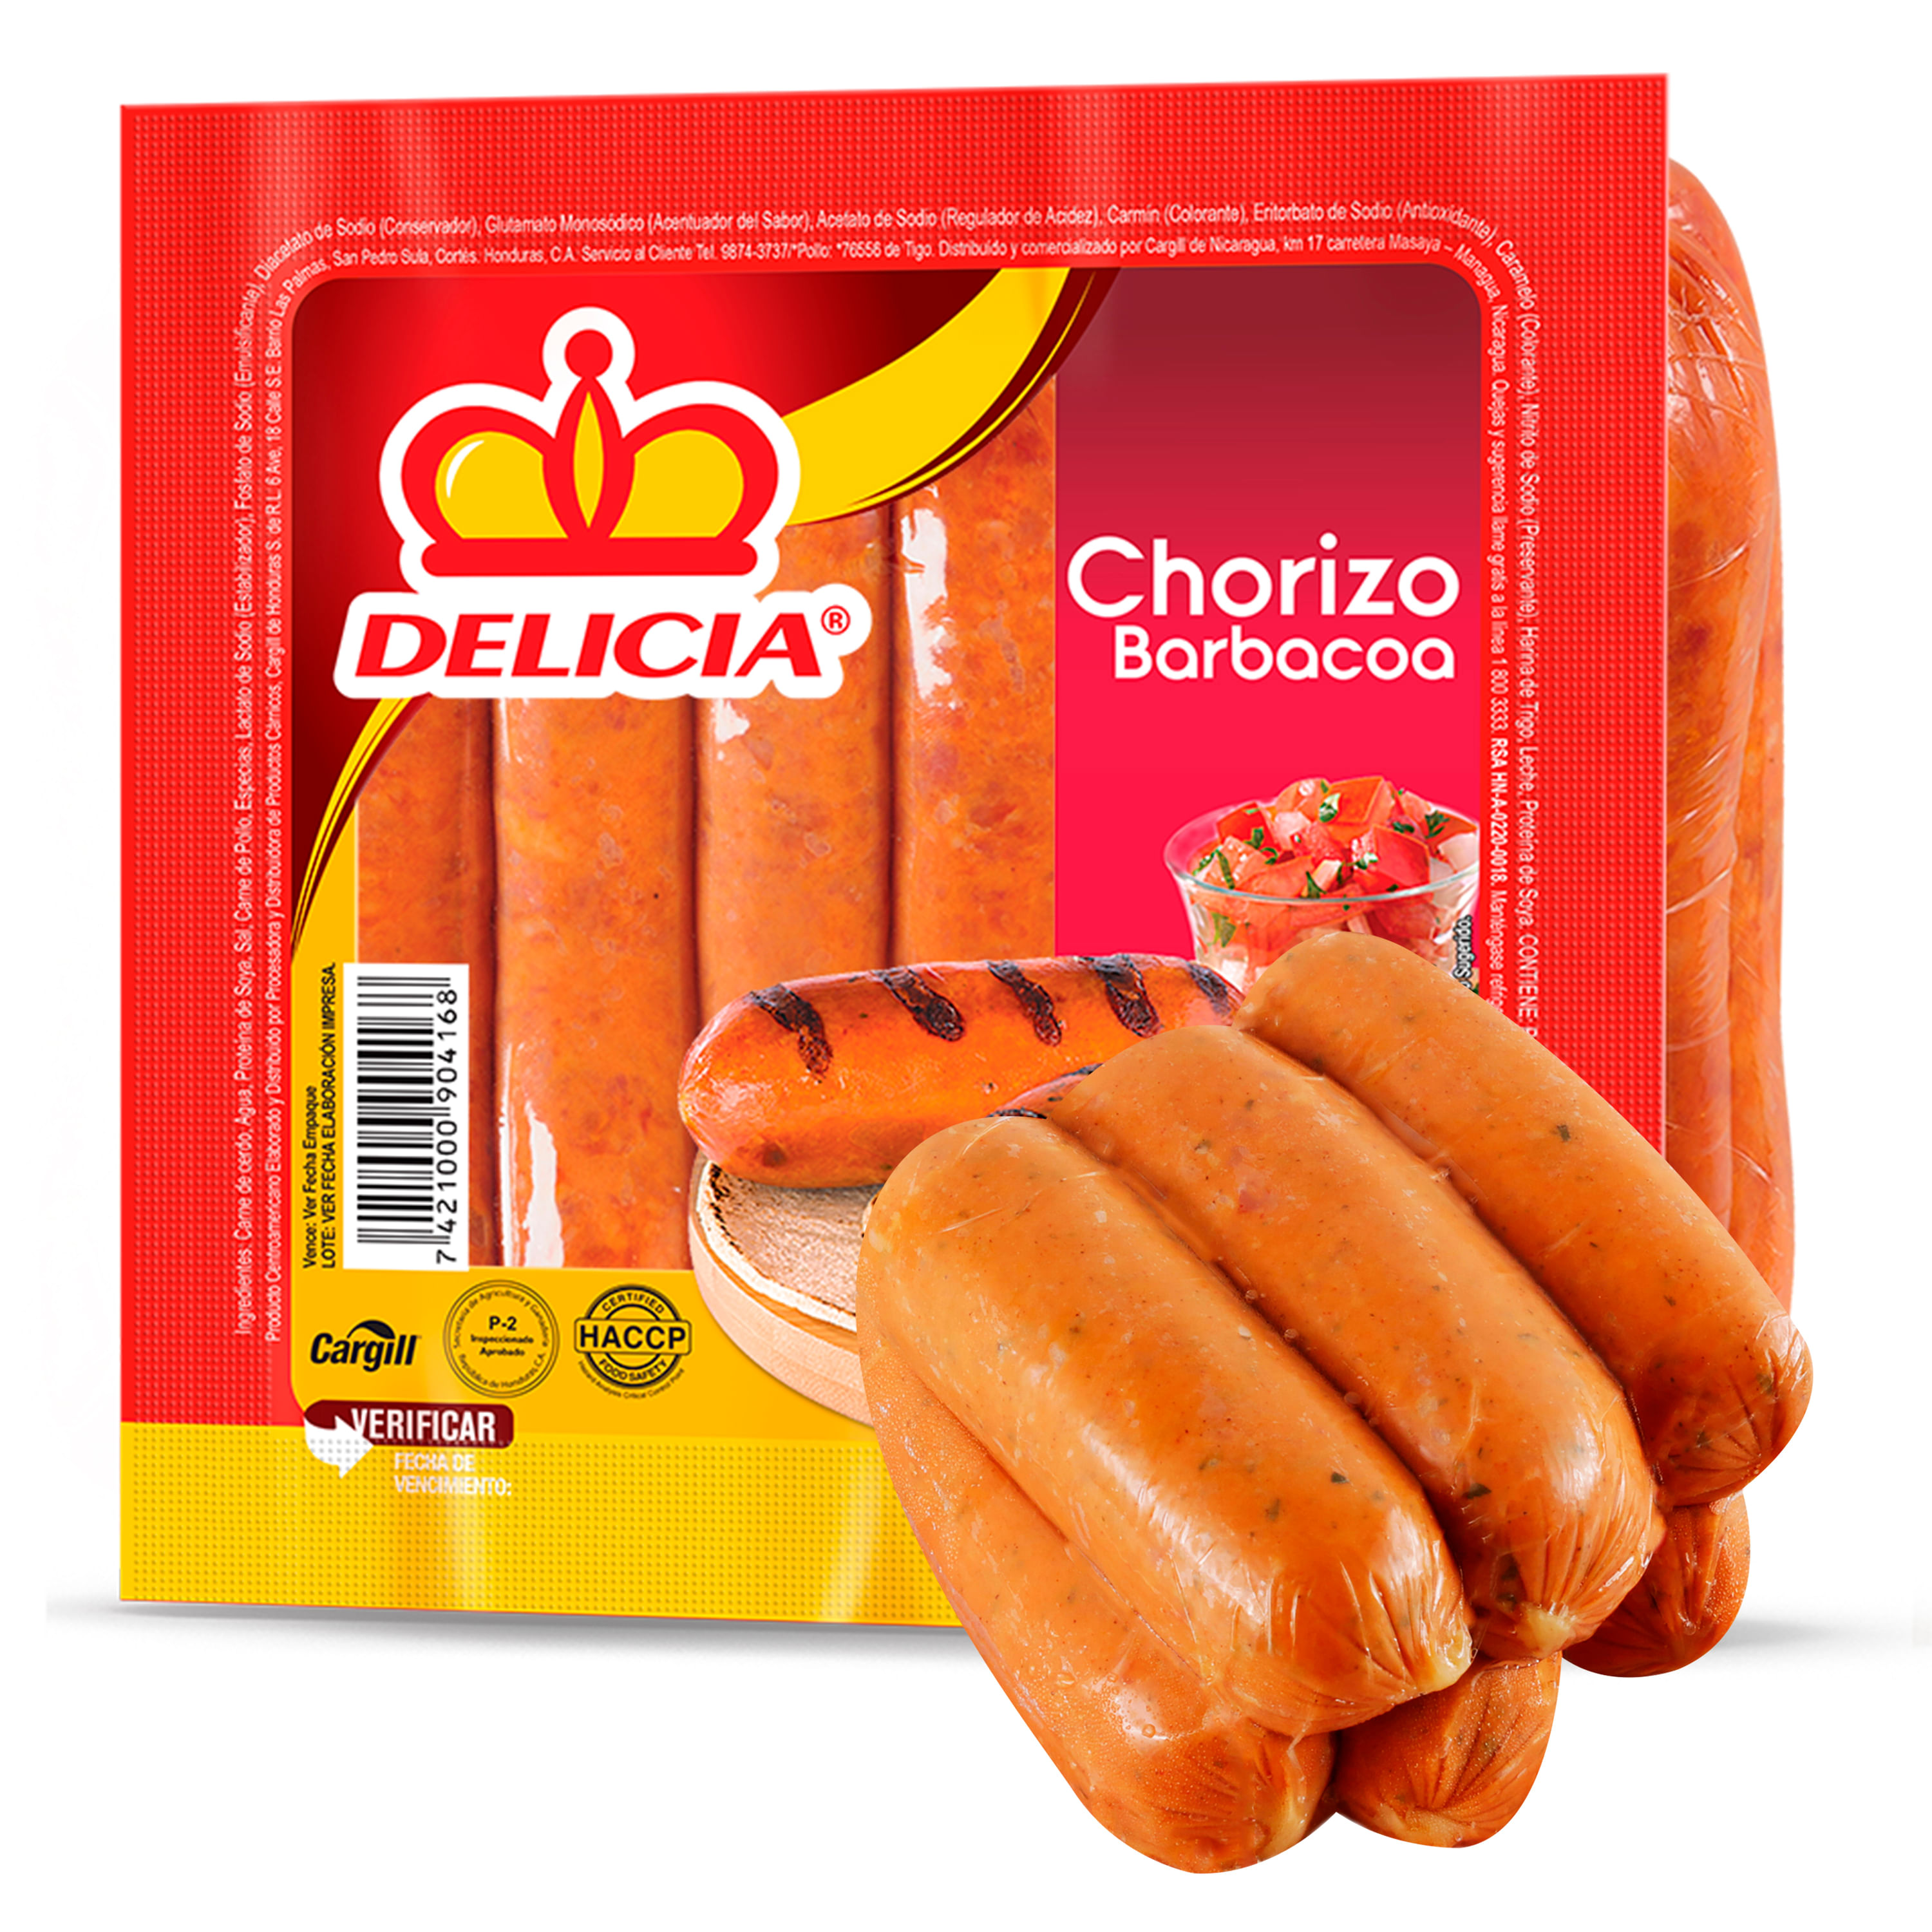 Chorizo-Barbacoa-Delicia-1-Lb-1-8762